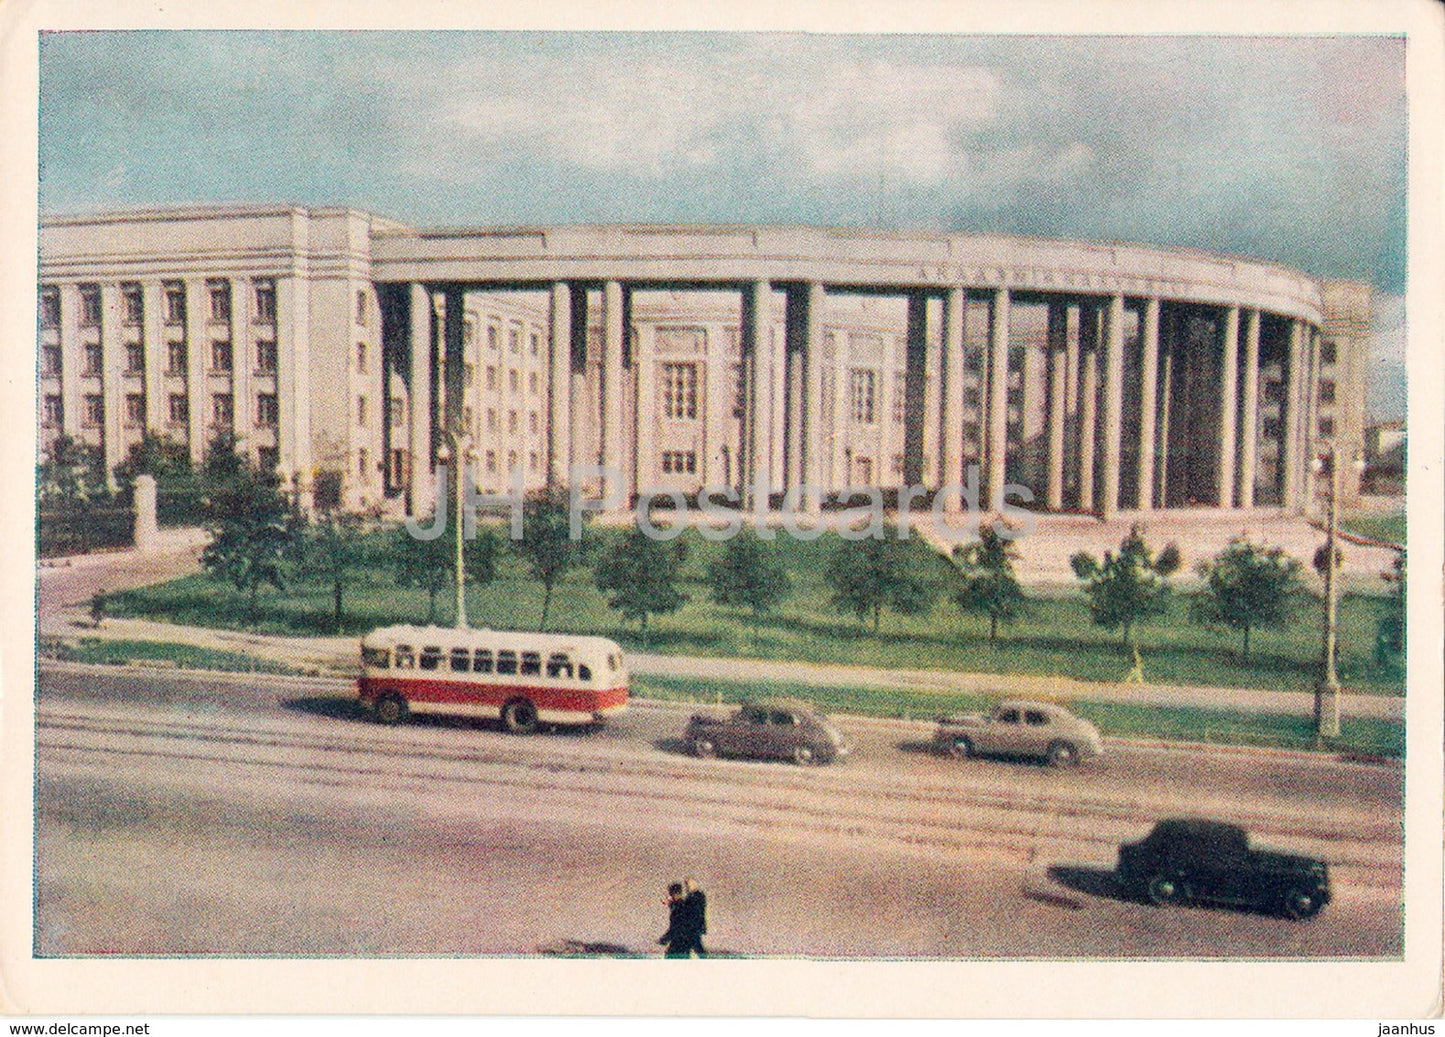 Minsk - Academy of Sciences - bus - car - 1956 - Belarus USSR -  unused - JH Postcards